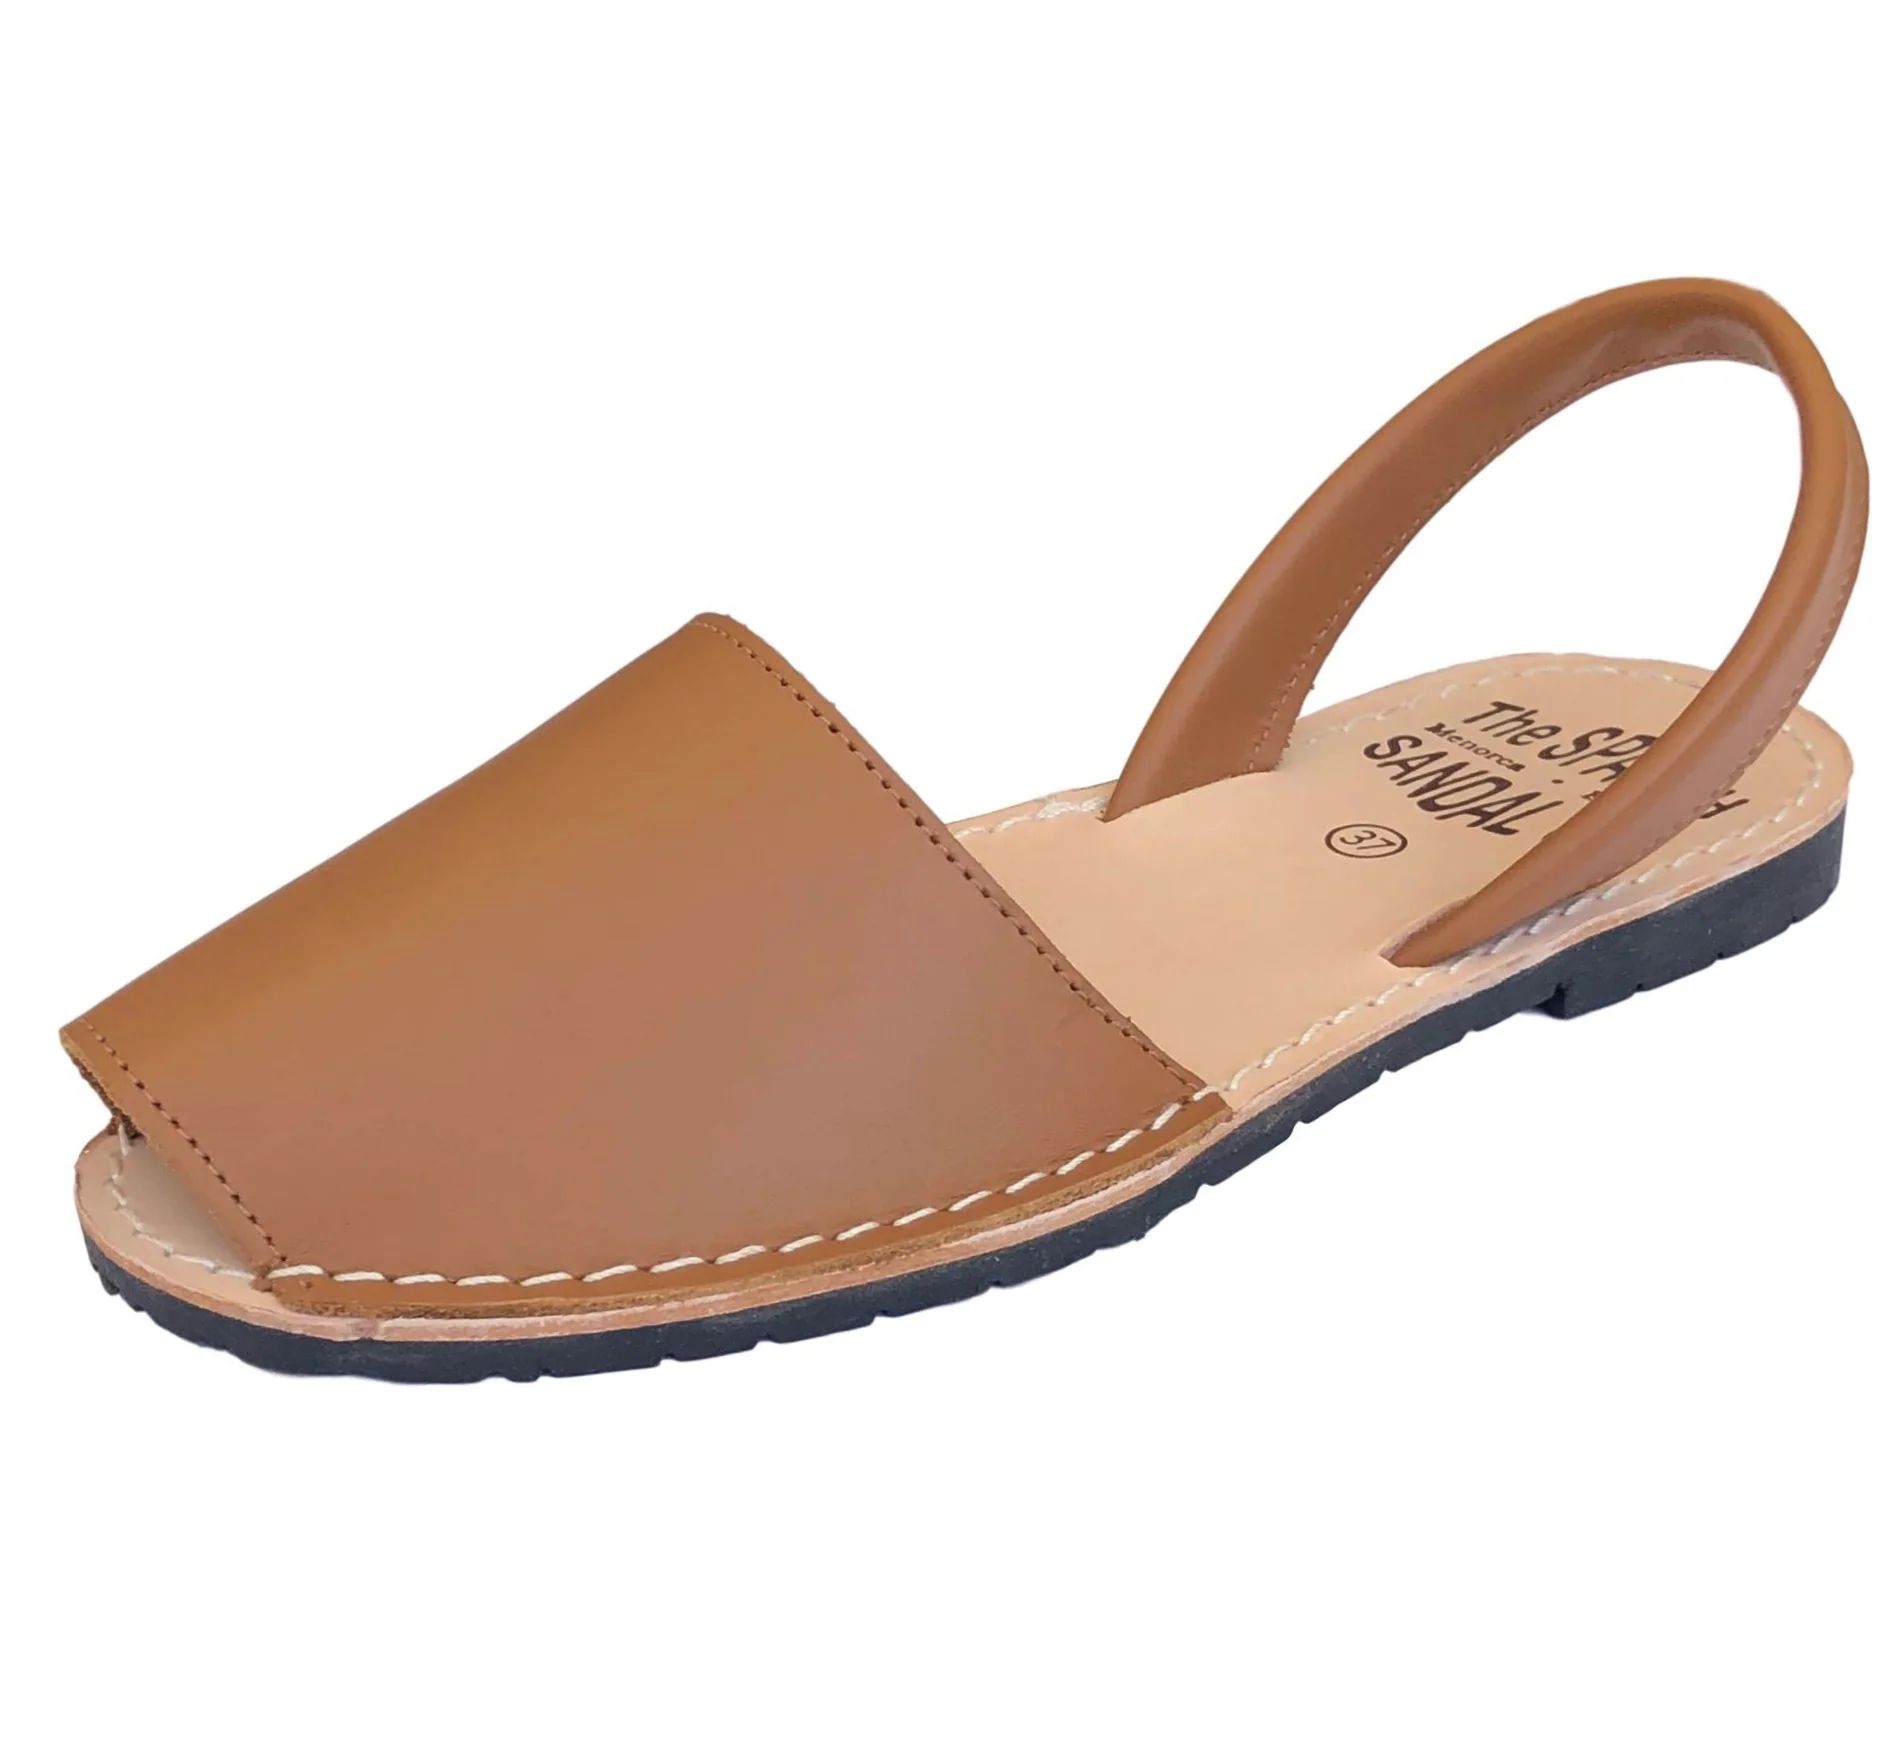 Classic Camel sandals | The Spanish Sandal Company